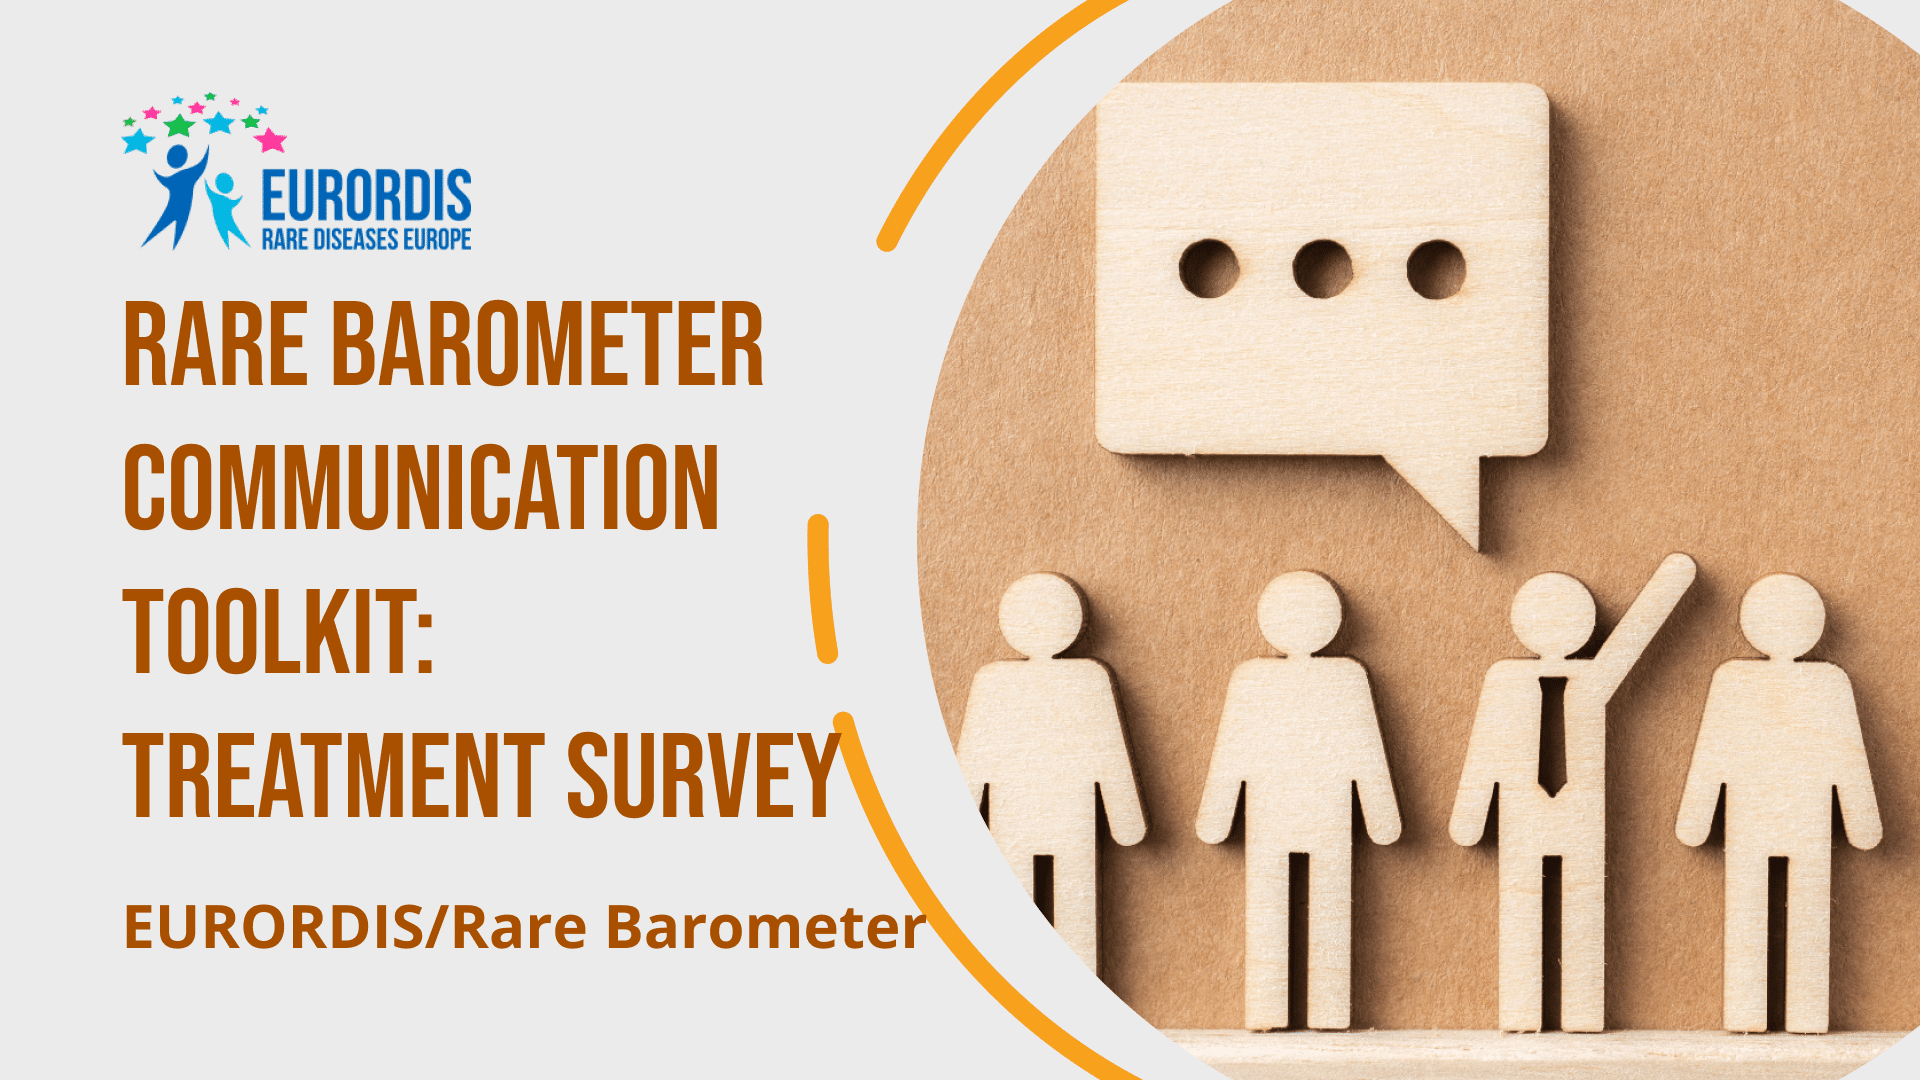 Rare barometer communication toolkit: Treatment Survey